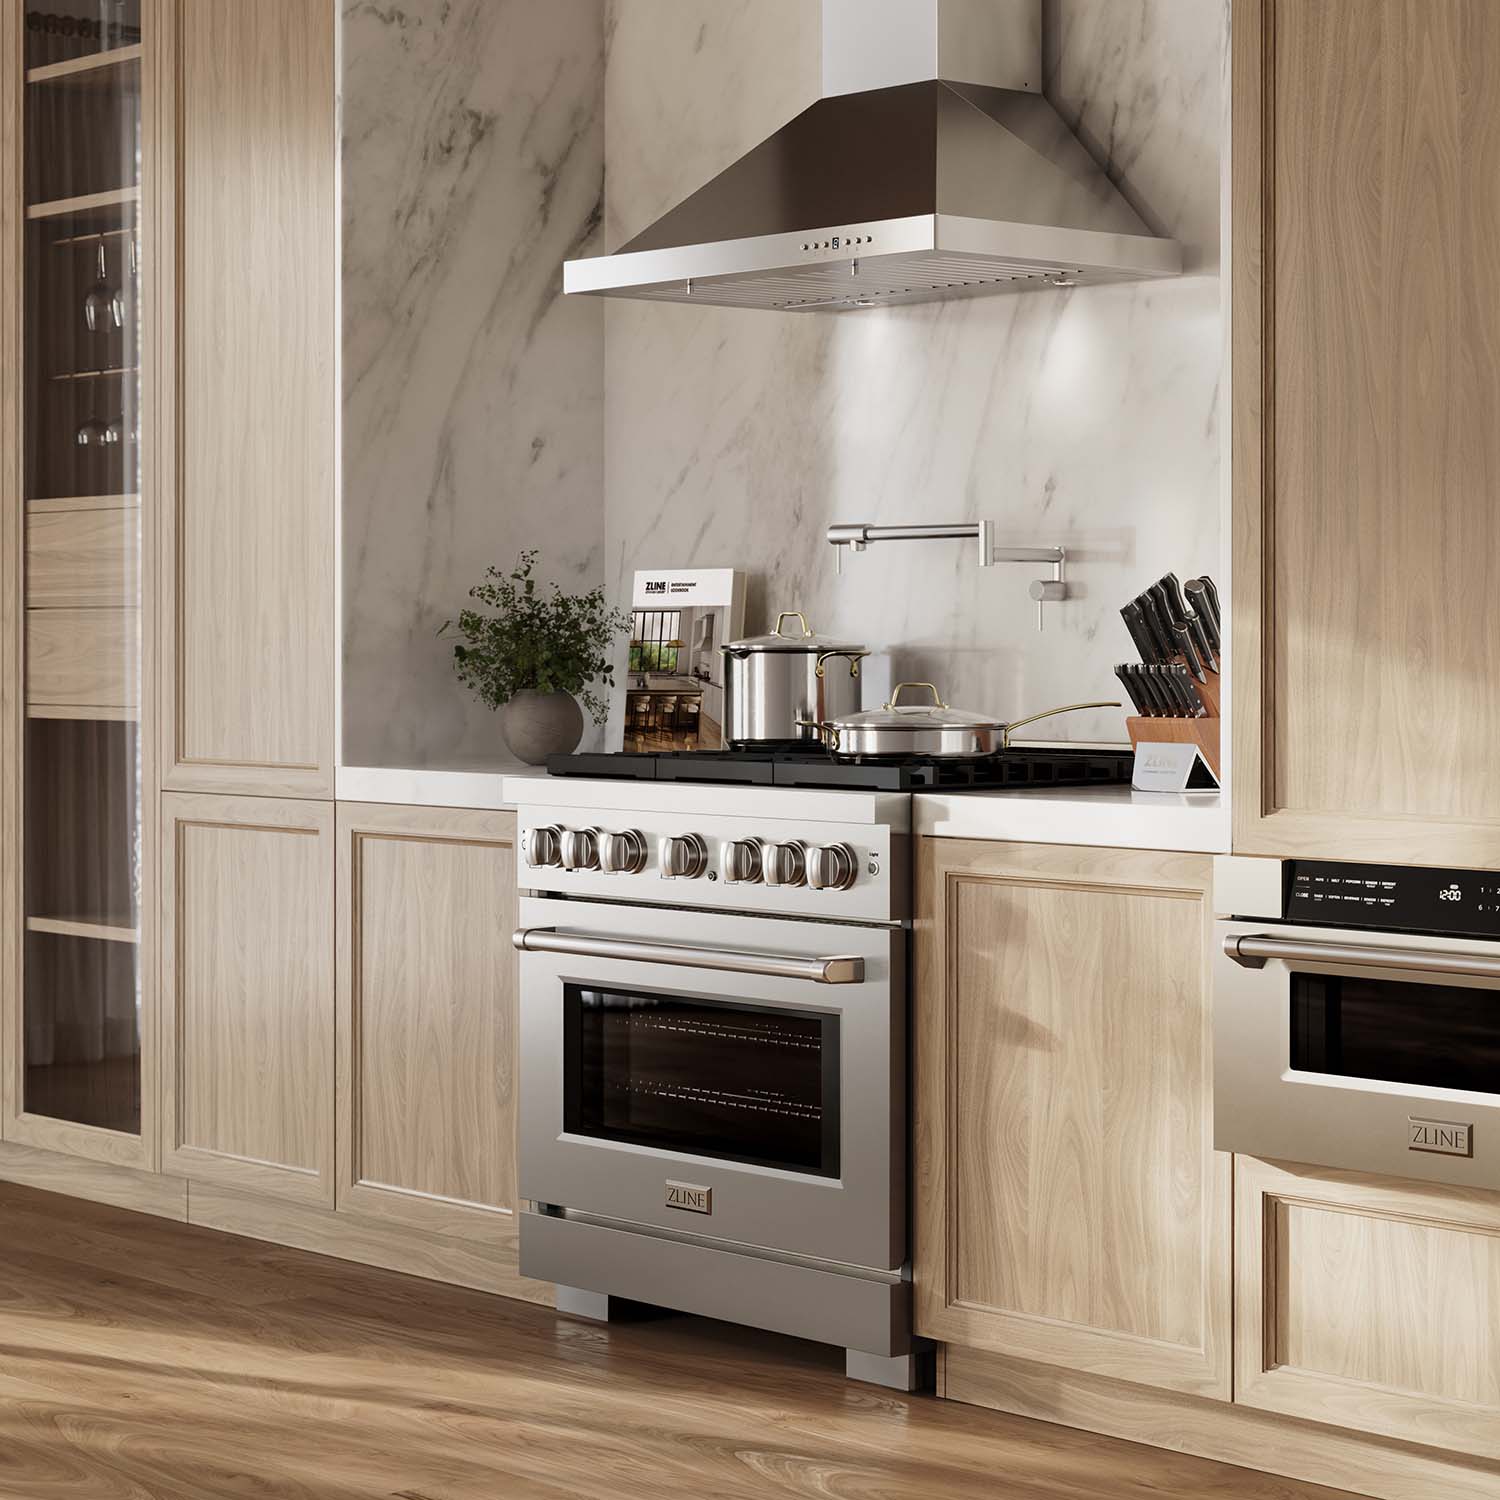 ZLINE 36" Stainless Steel Gas Range in a luxury kitchen side angle.